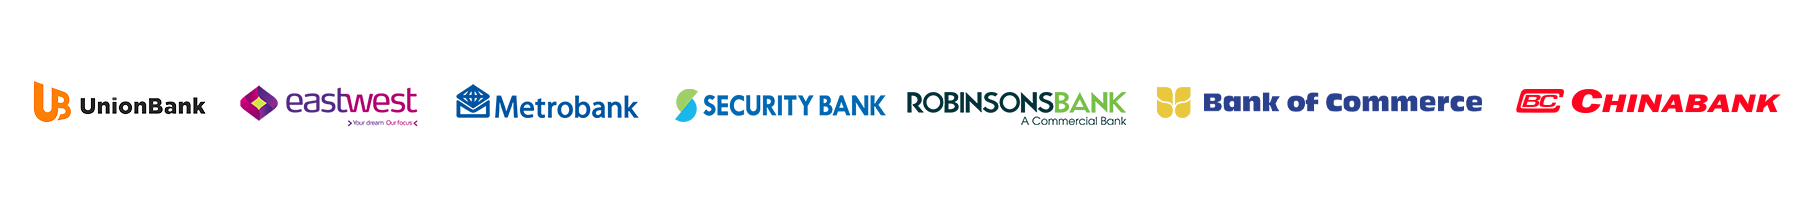 Car Financing - UnionBank - EastWest - Metrobank - Security Bank - Robinsons Bank - Bank of Commerce - China Bank